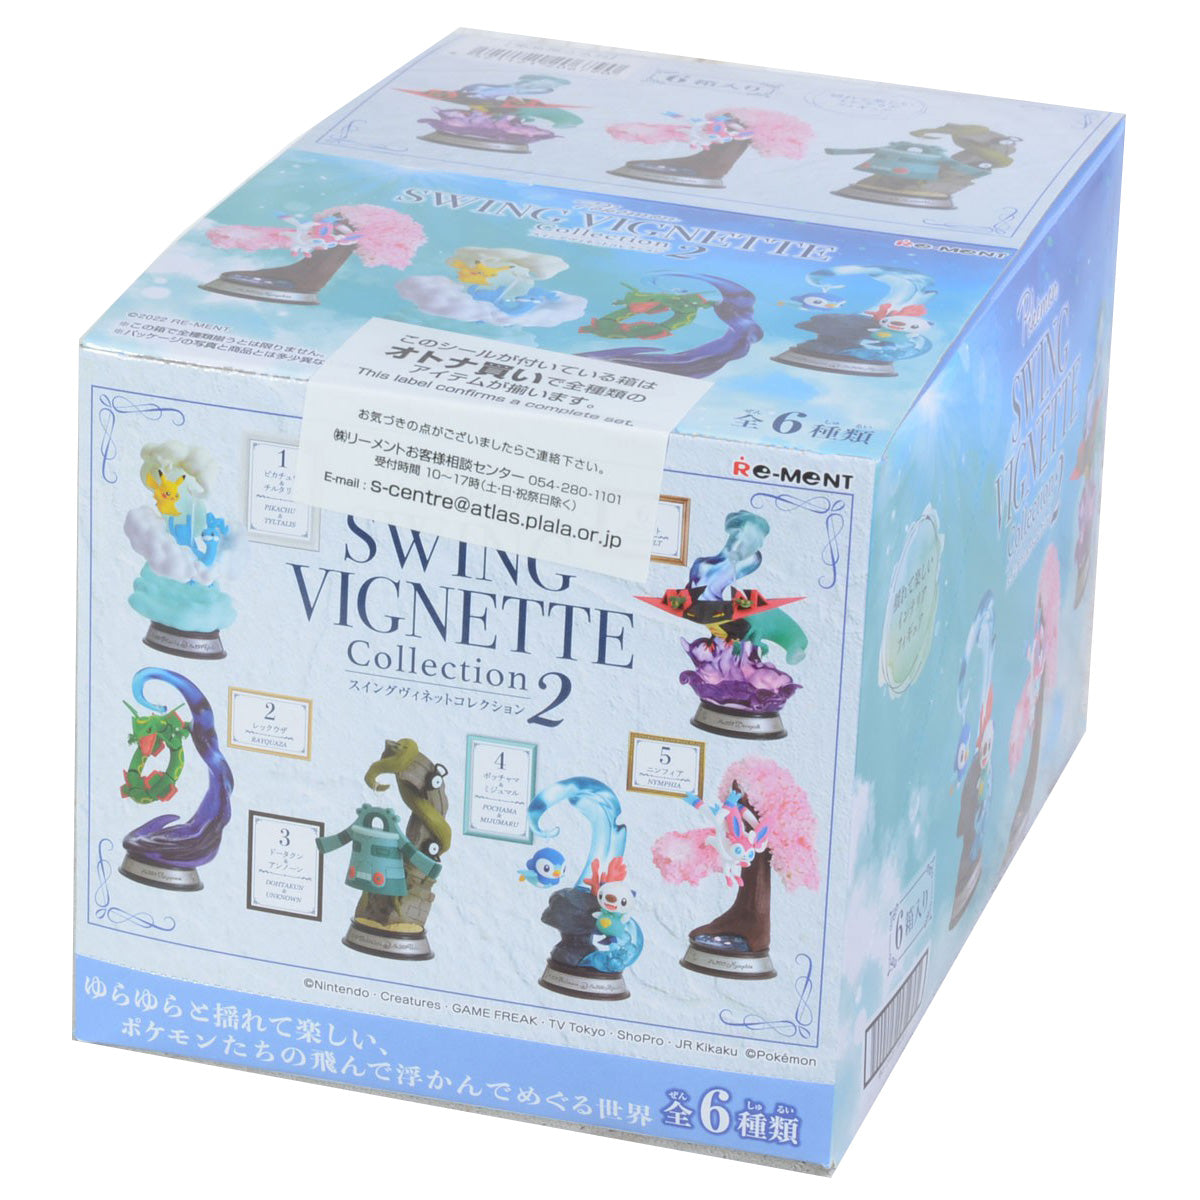 Re-Ment Pokemon Swing Vignette Collection 2